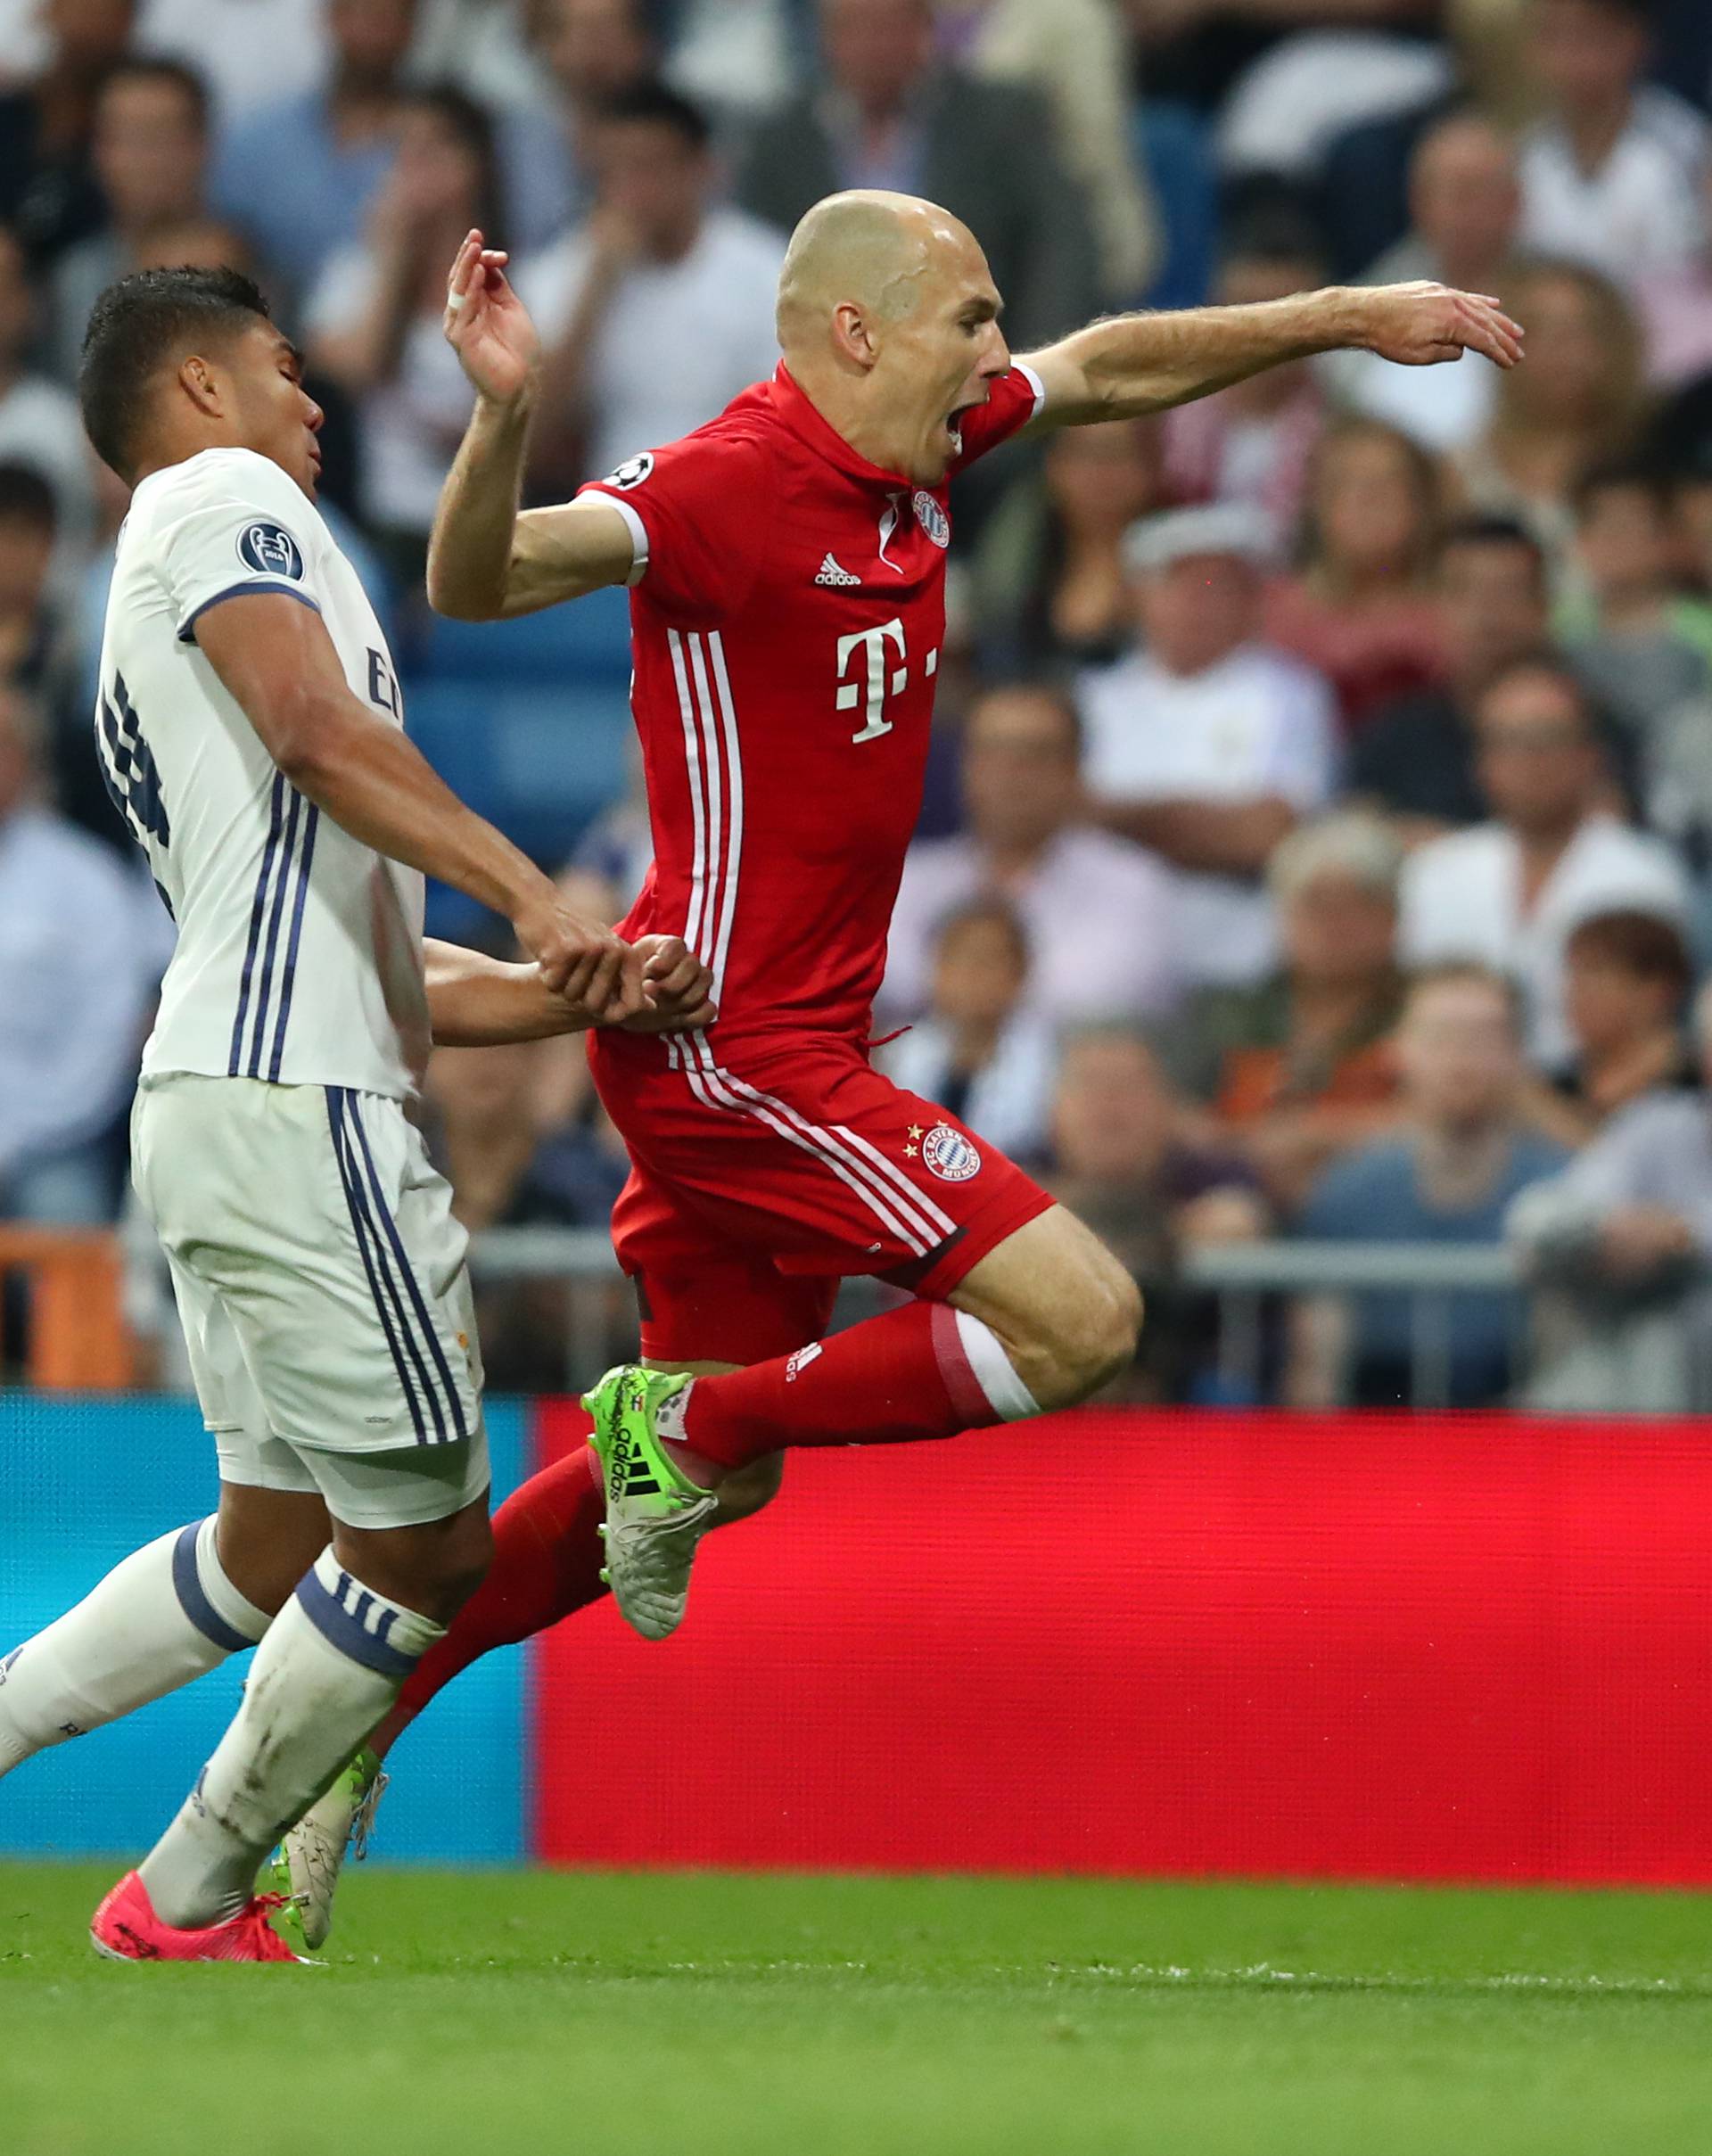 Bayern Munich's Arjen Robben is fouled by Real Madrid's Casemiro for a penalty